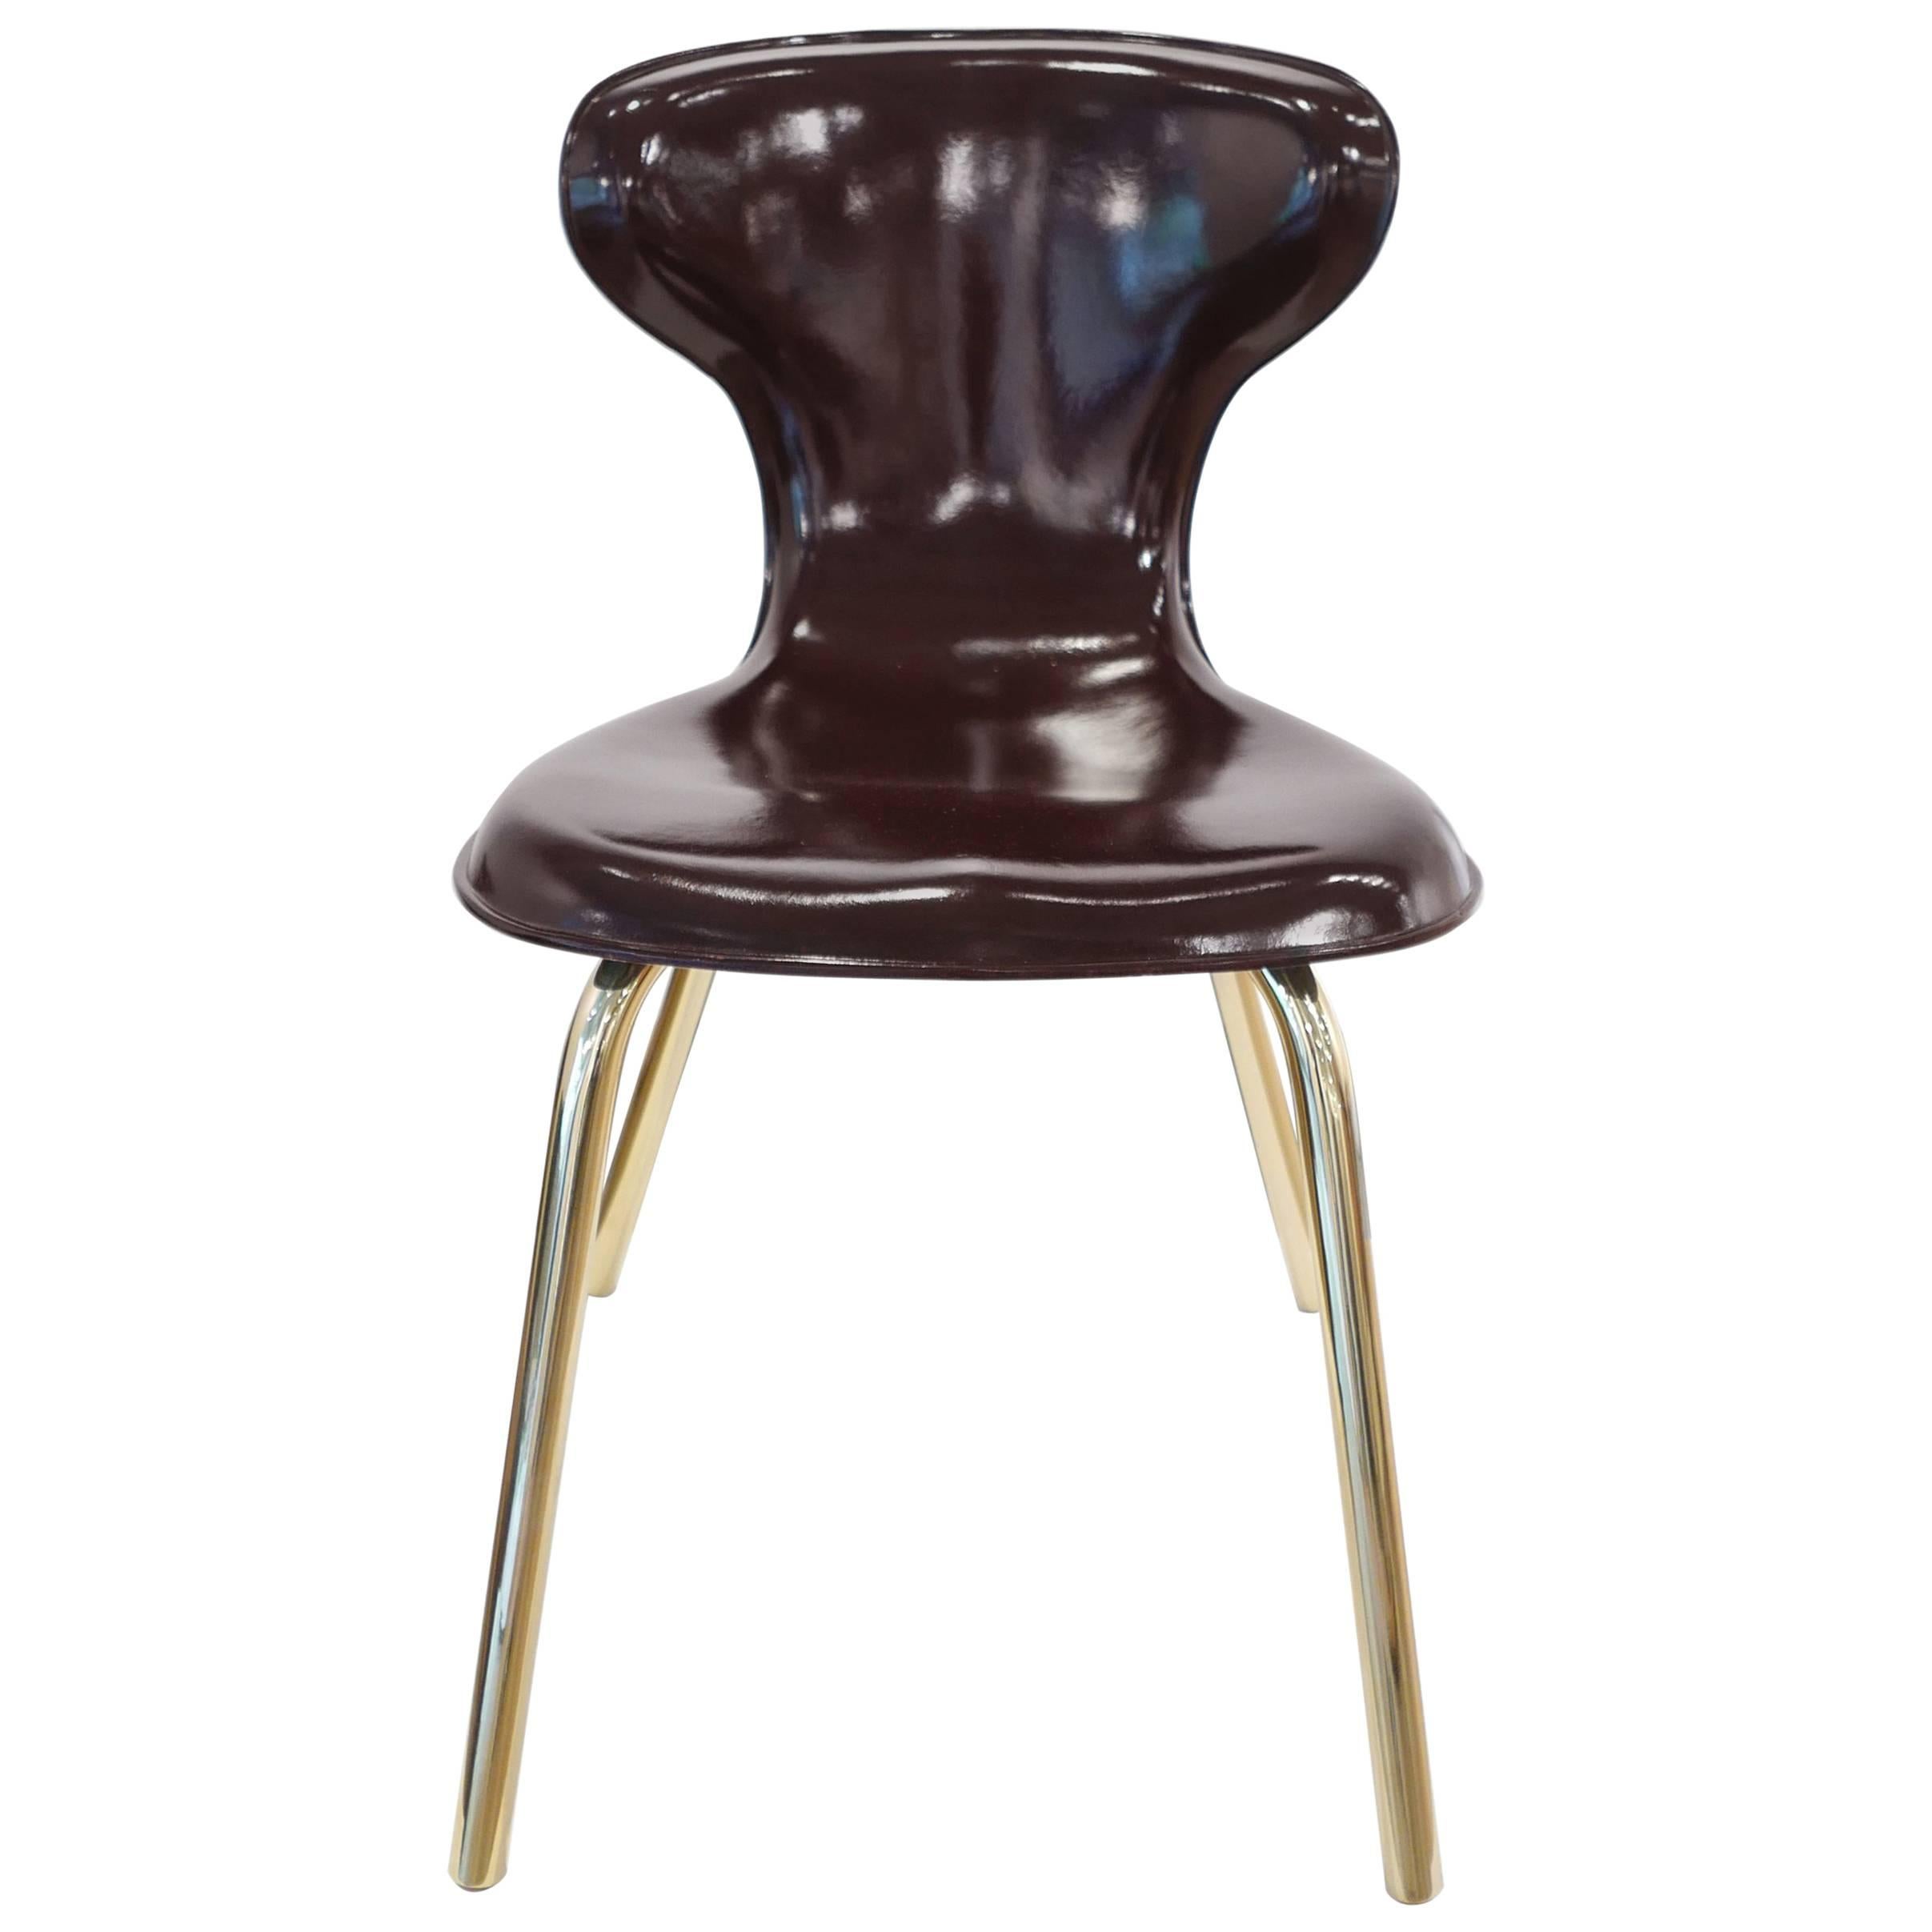 Egmont Arens Fiberglass Chair For Sale